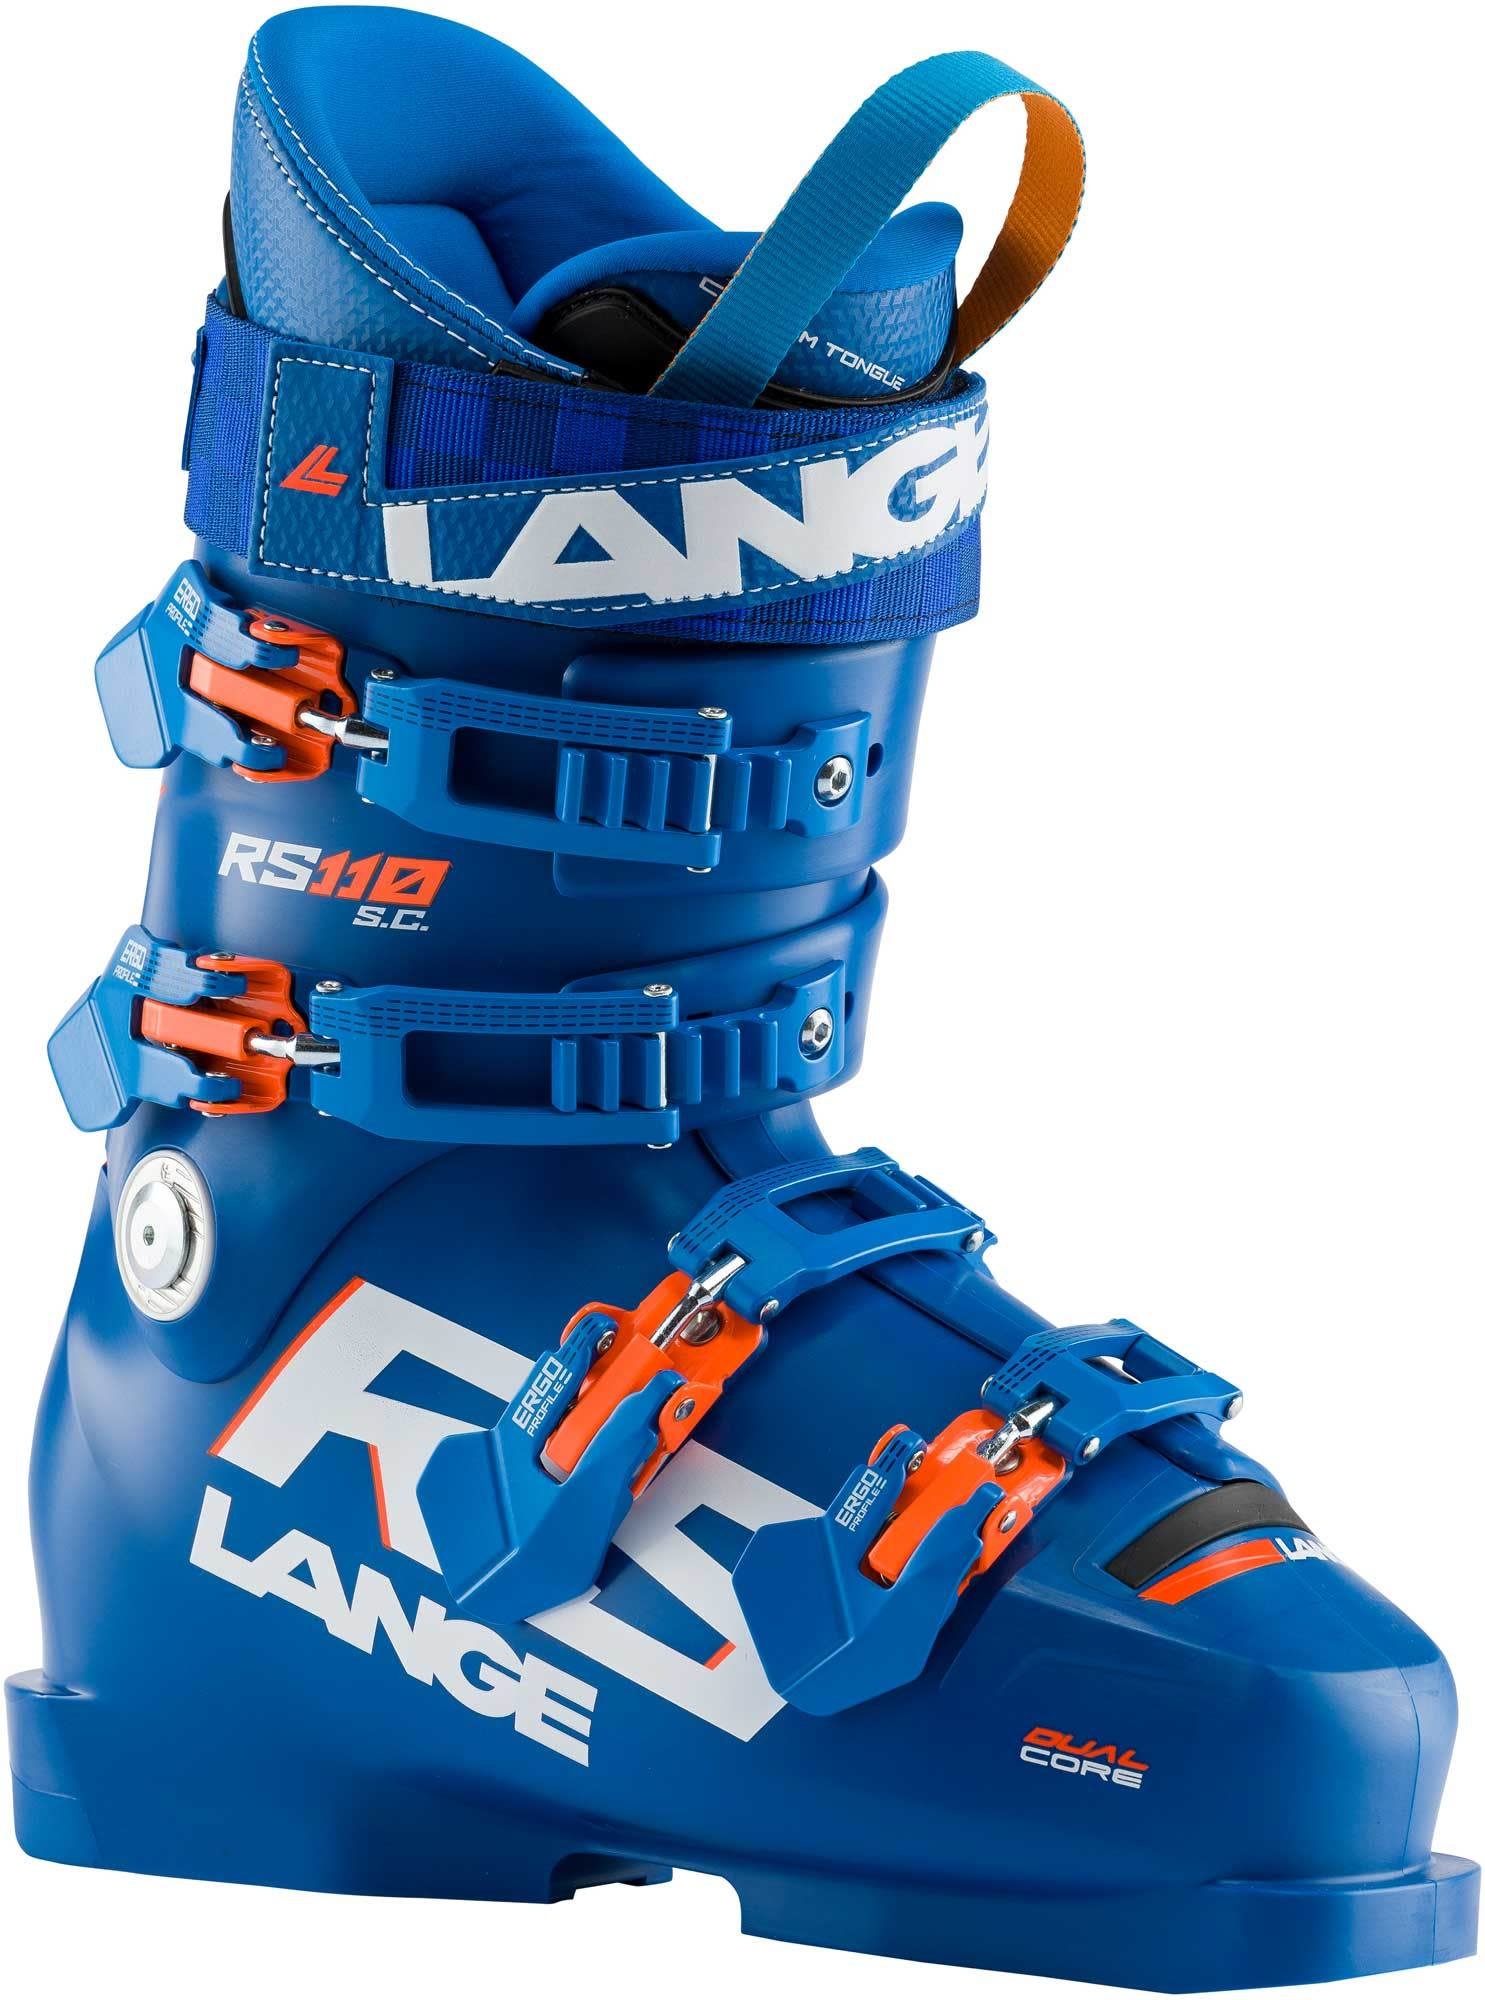 Lange Rs 110 S.C. (Power Blue) (21/22)